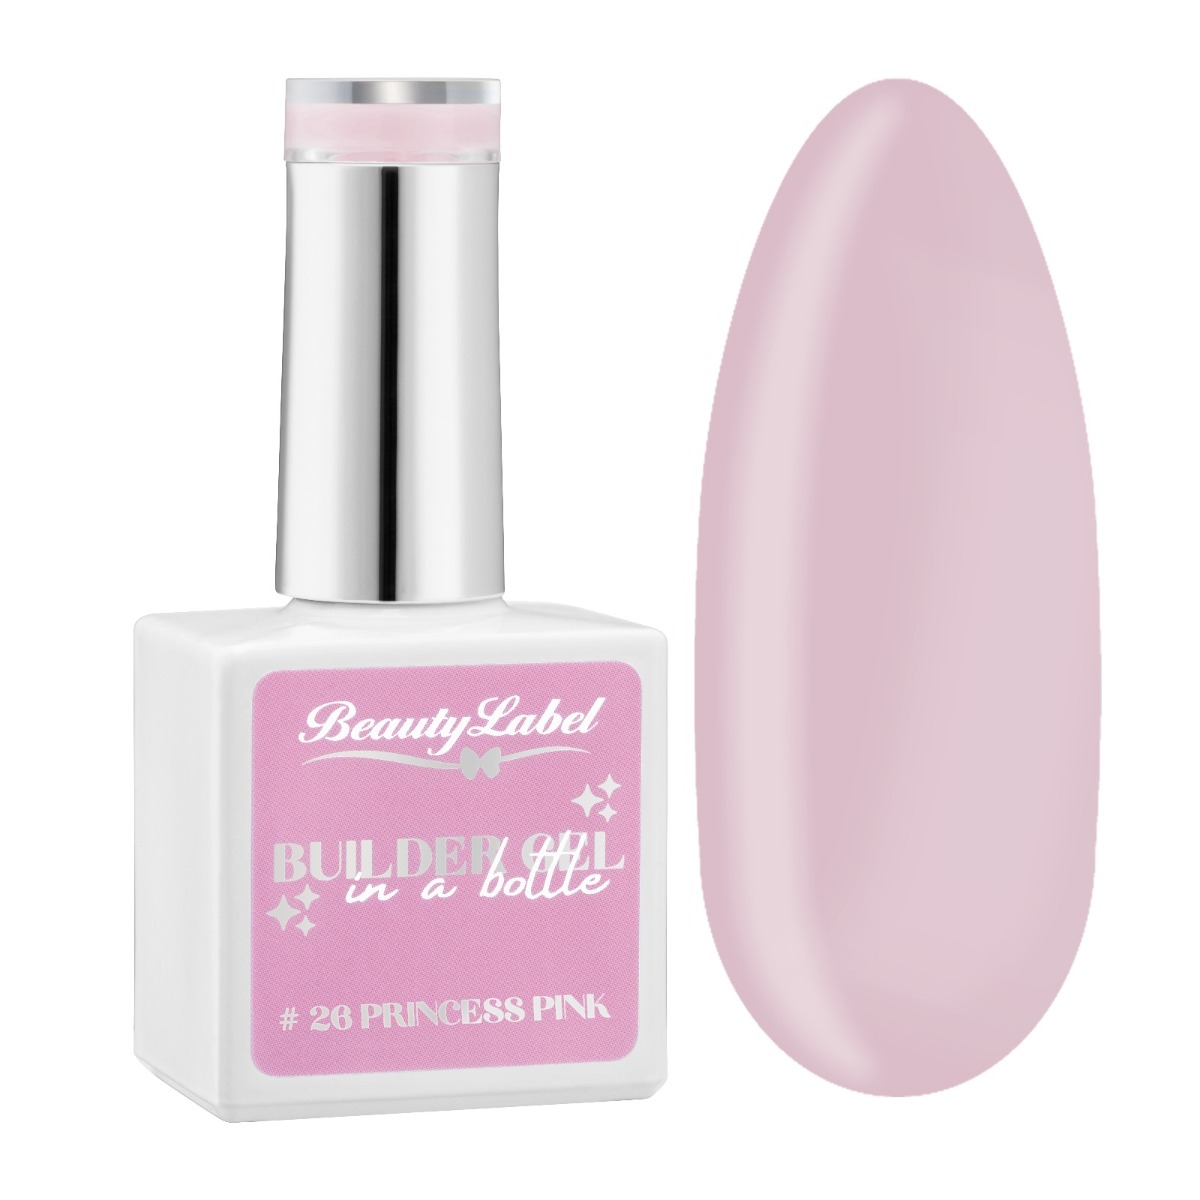 Beauty Label Builder in a bottle #26 - Princess pink